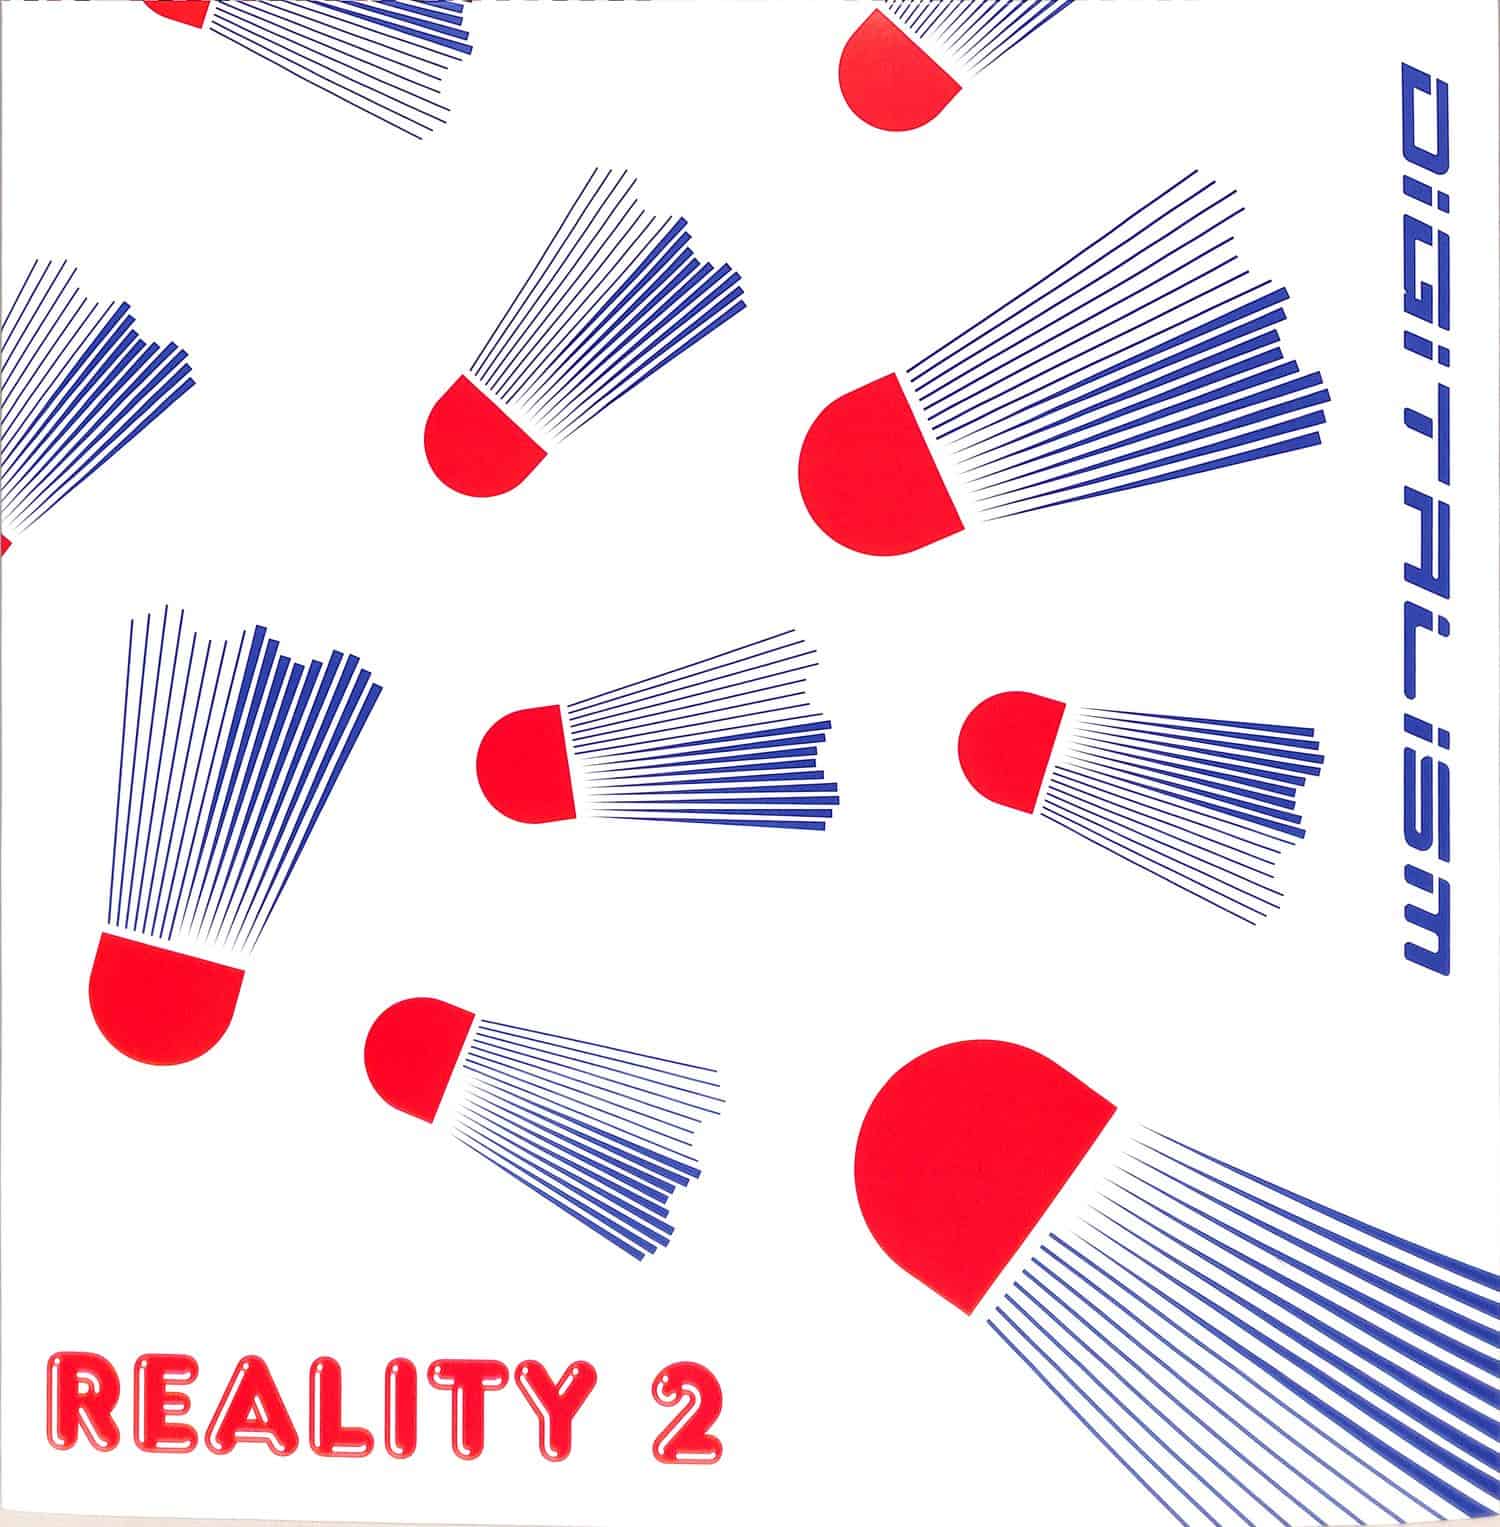 Digitalism - REALITY 2